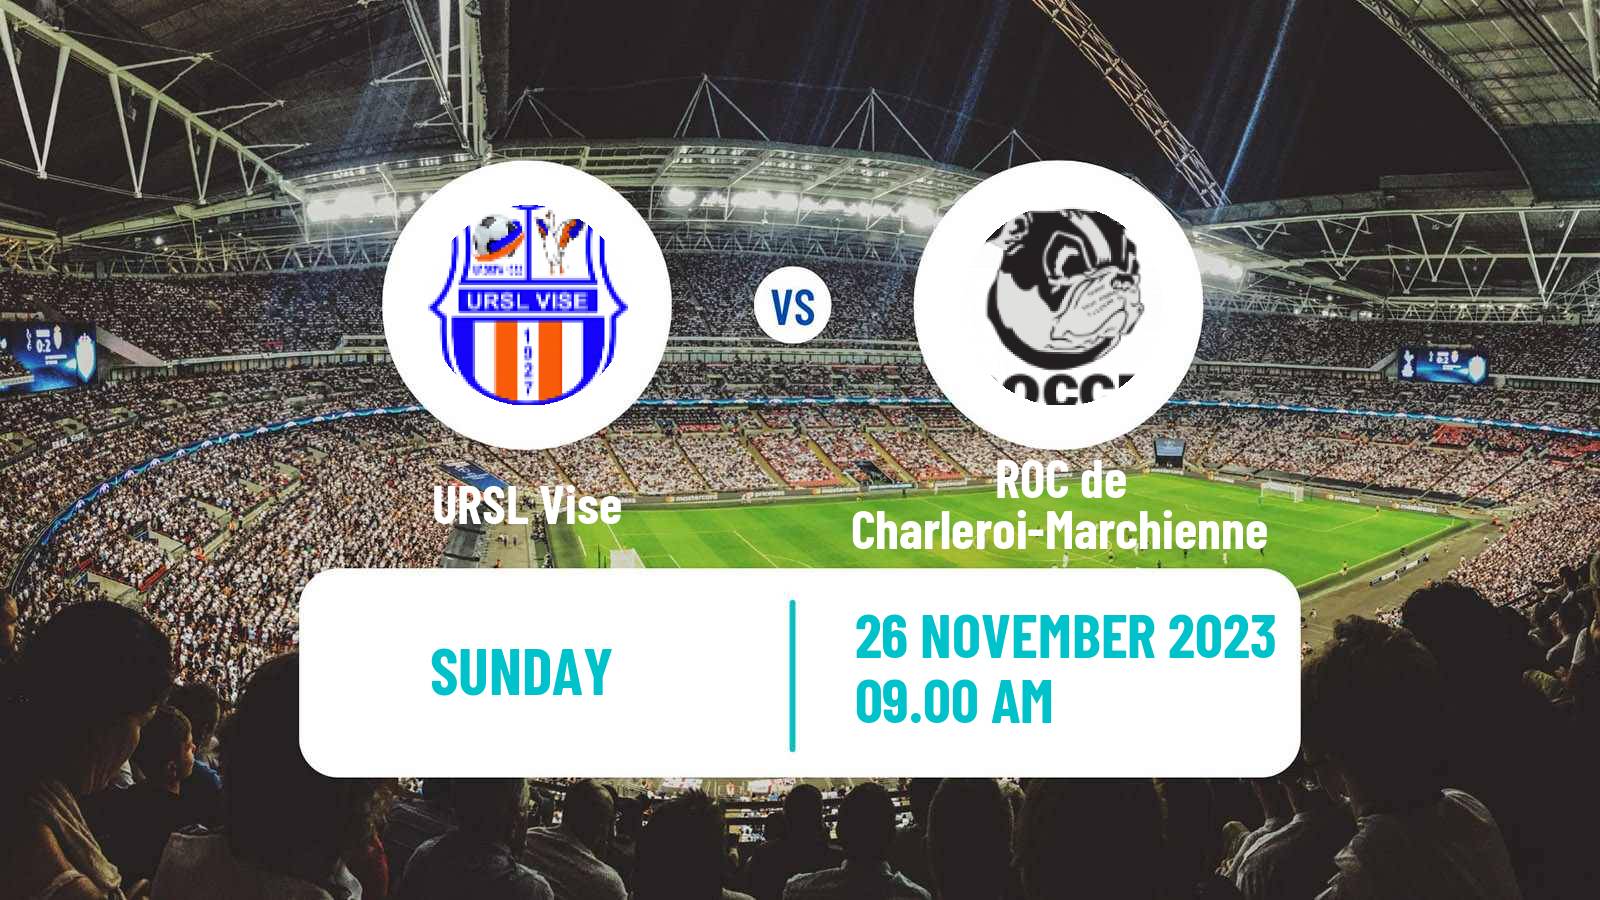 Soccer Belgian National Division 1 URSL Vise - ROC de Charleroi-Marchienne